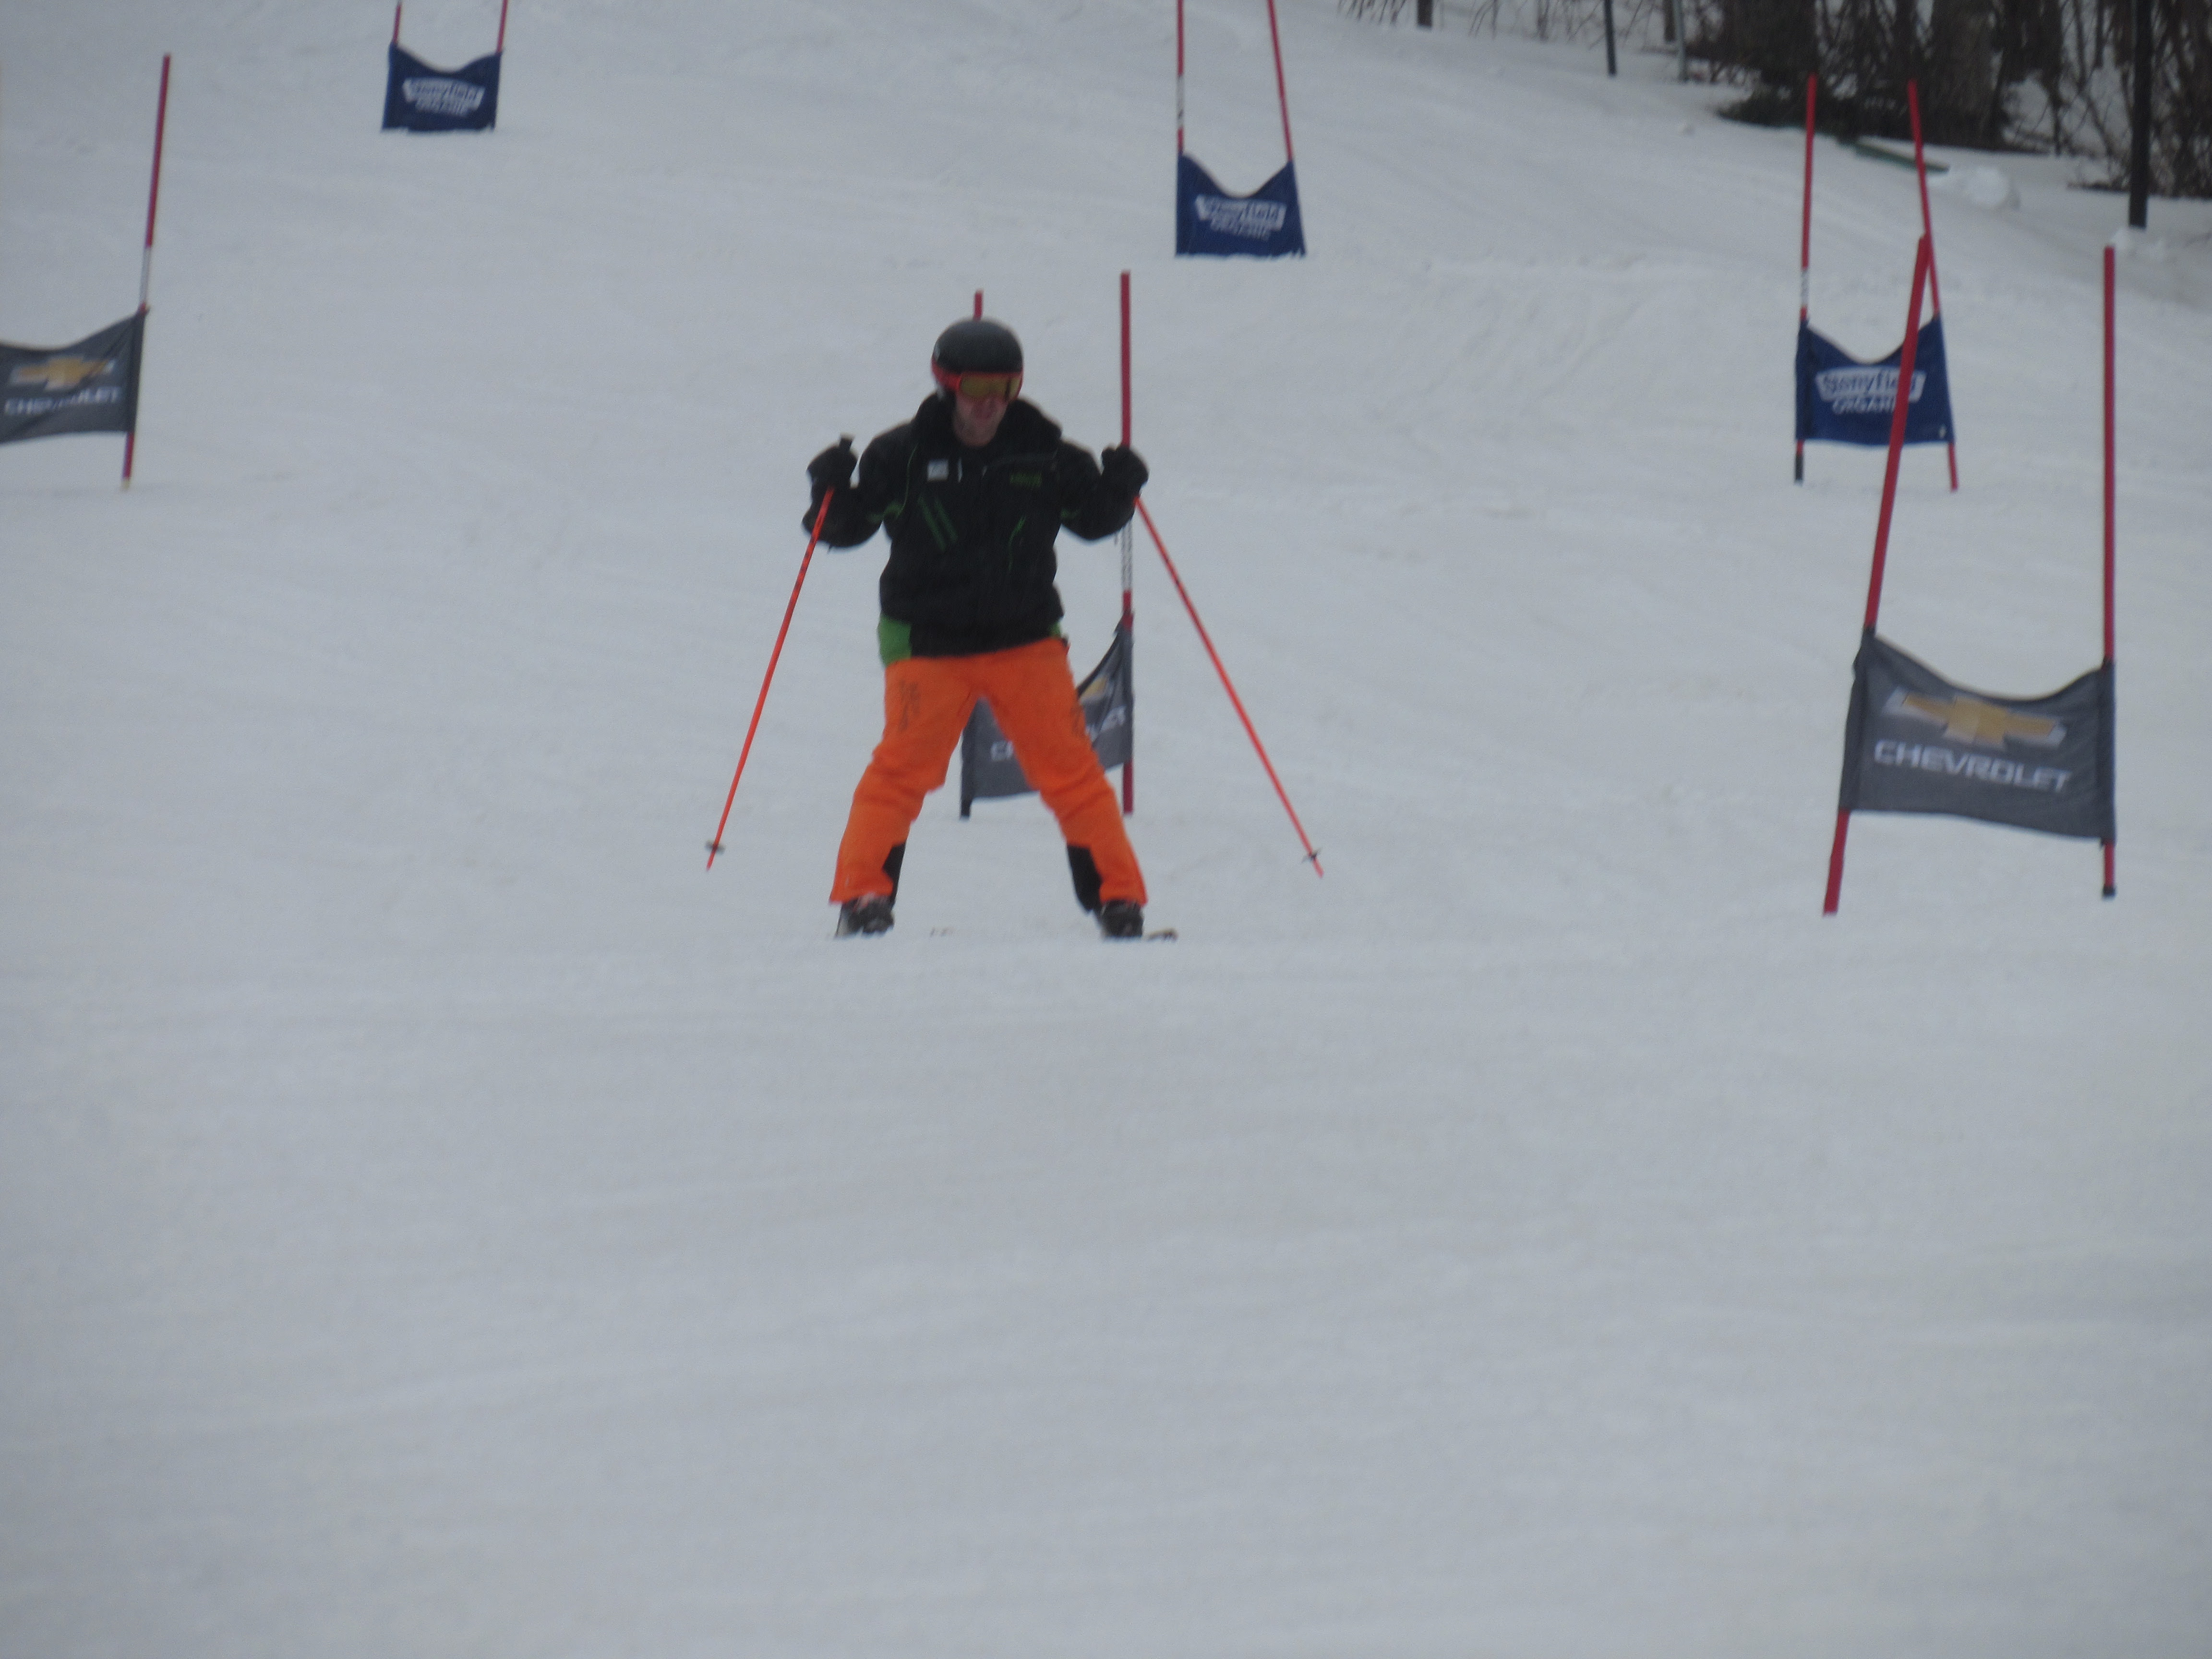 Bruce Williams skiing